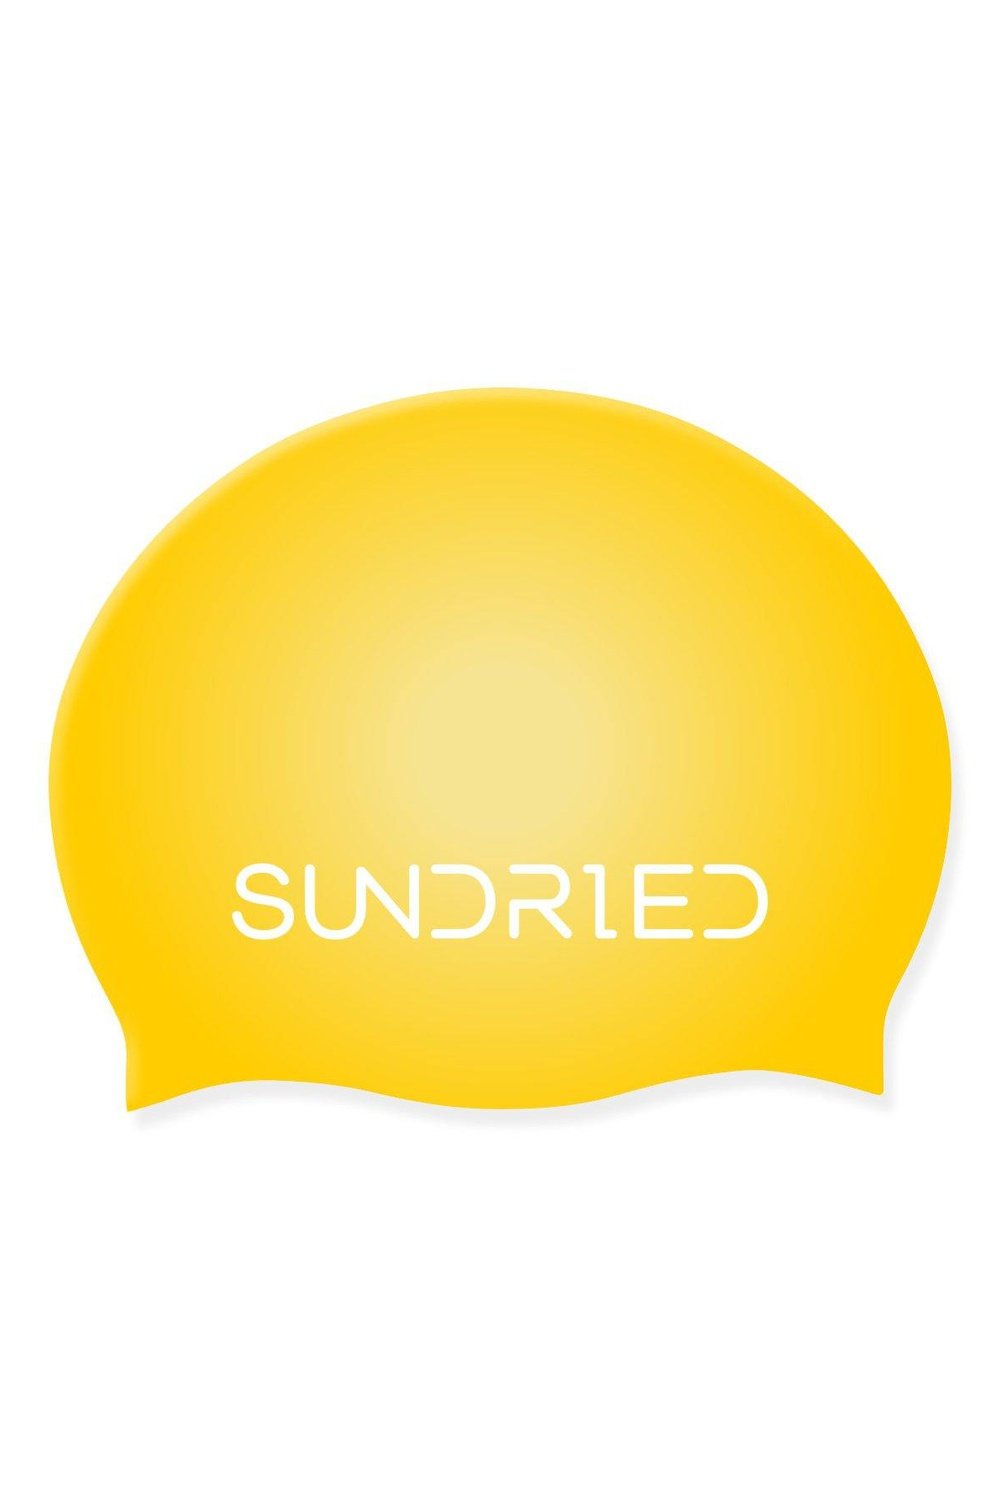 Sundried Swim Hat Accessories Yellow SD0111 Yellow Activewear